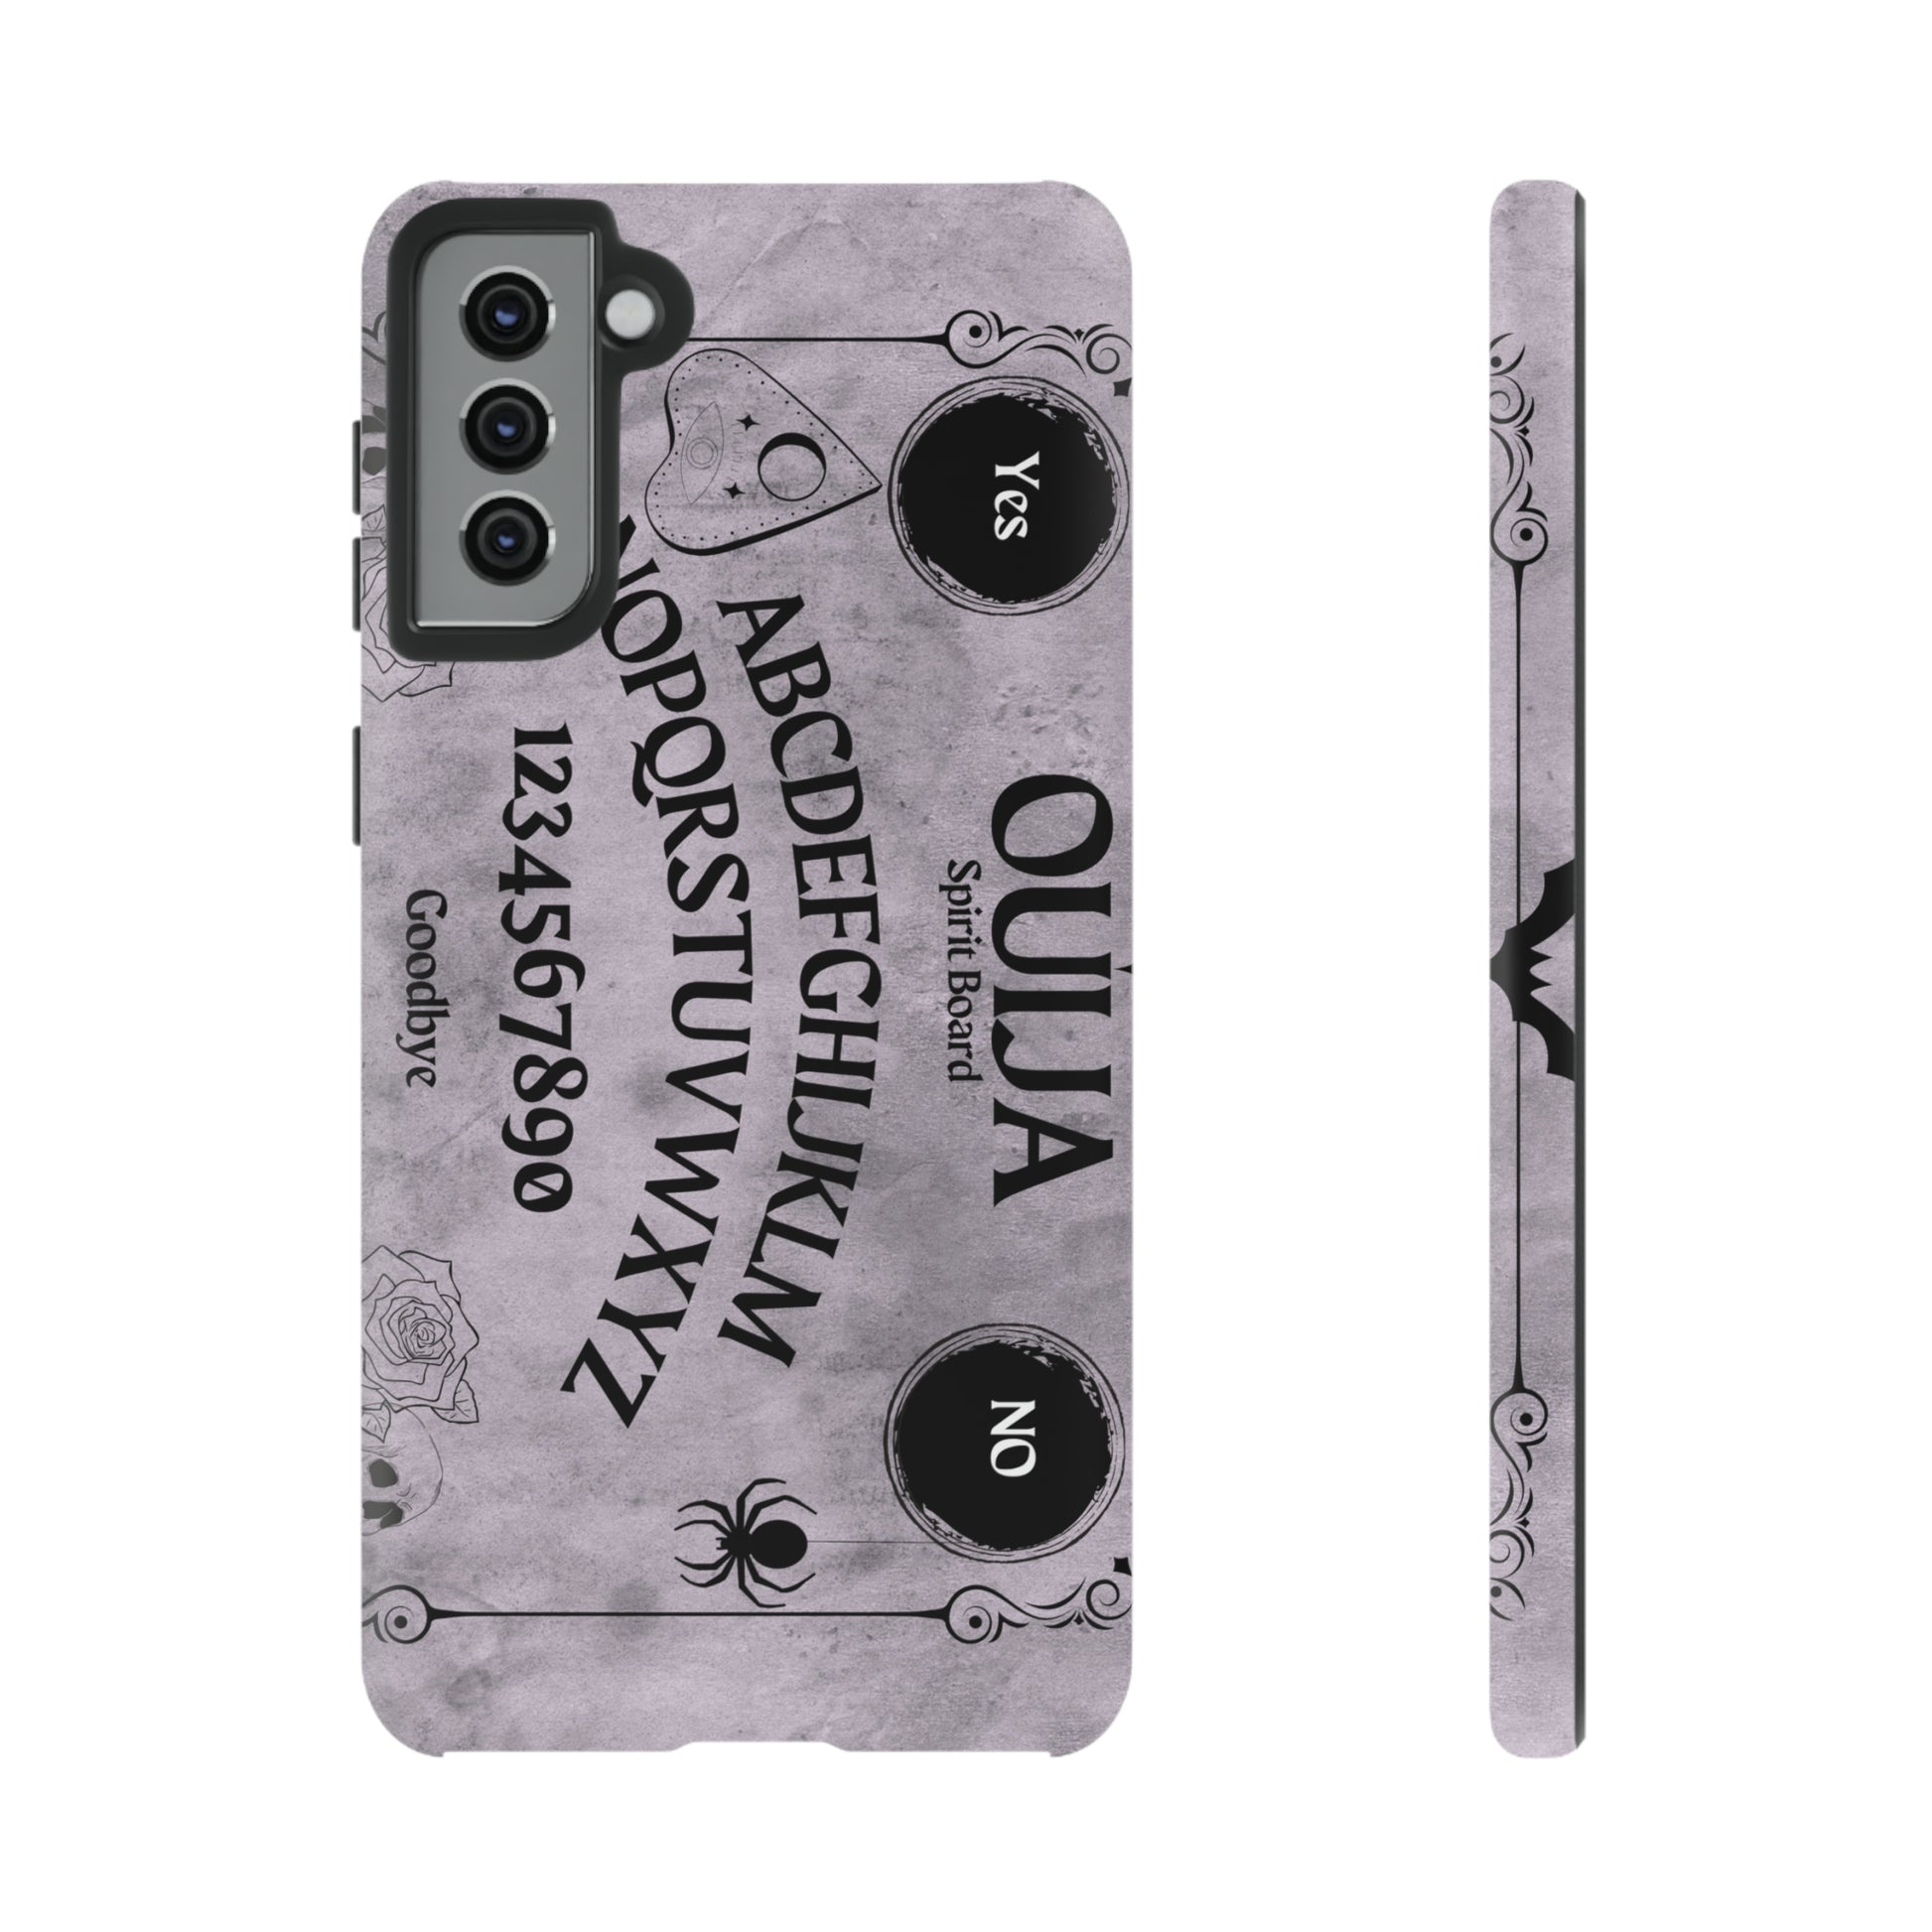 Ouija Board Tough Phone Cases For Samsung iPhone GooglePhone CaseVTZdesignsSamsung Galaxy S21 PlusMatteAccessoriesGlossyhalloween